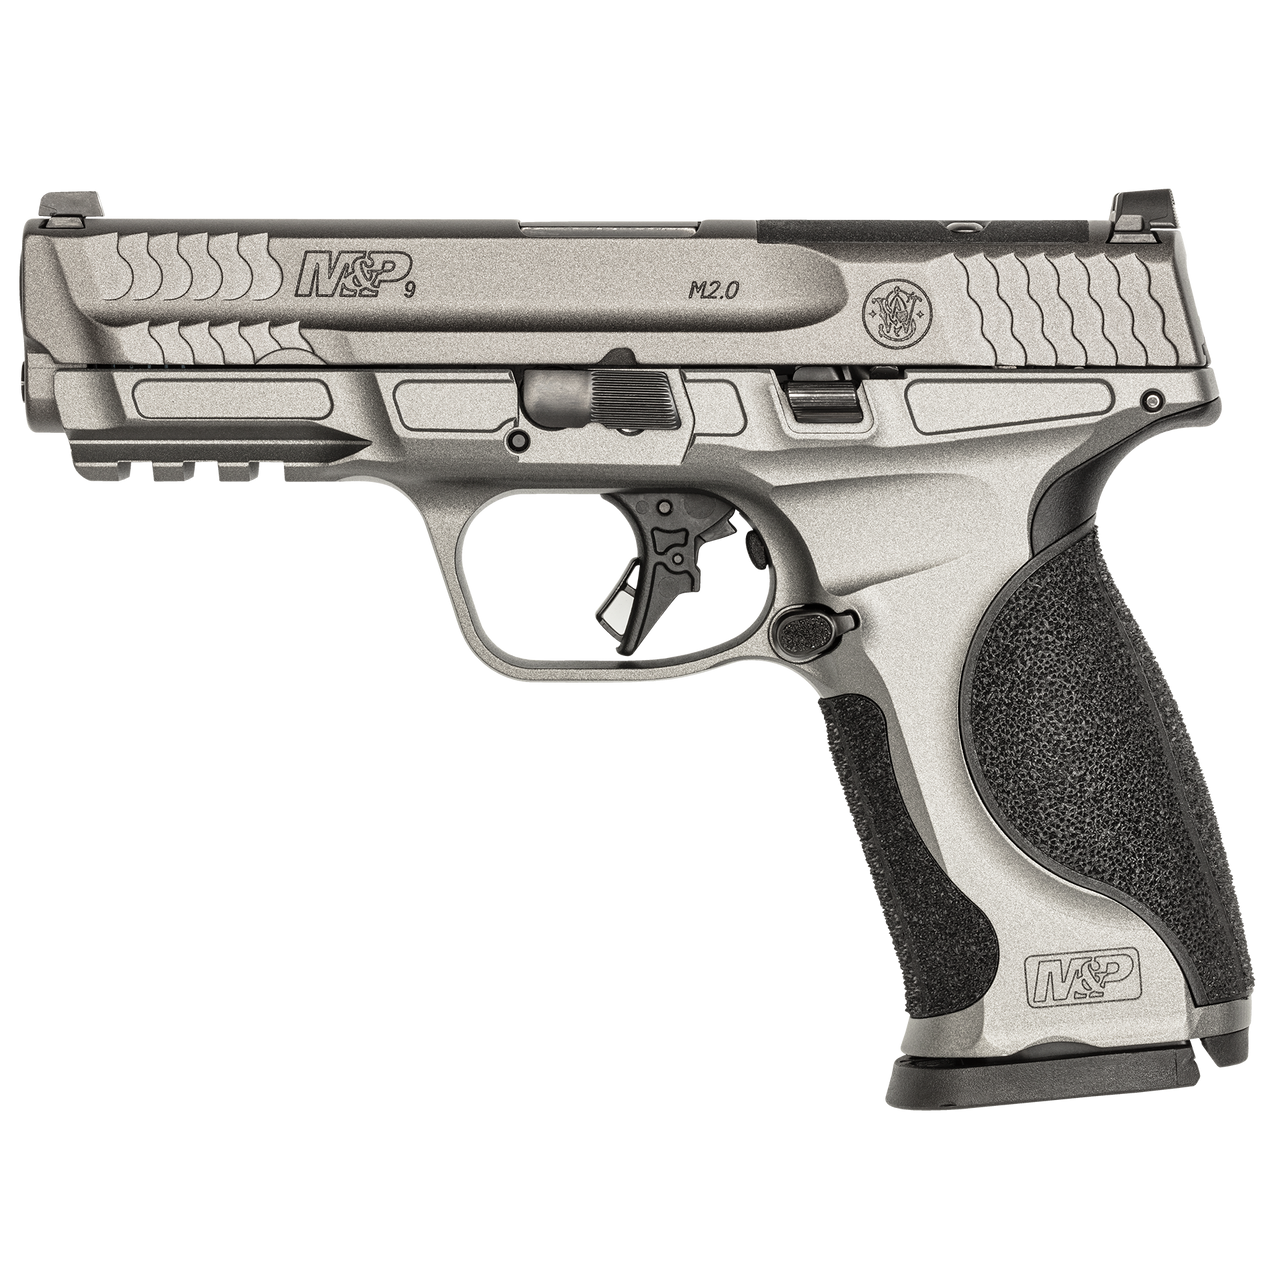 Buy Smith & Wesson M&P 9 M2.0 Metal Pistol Online